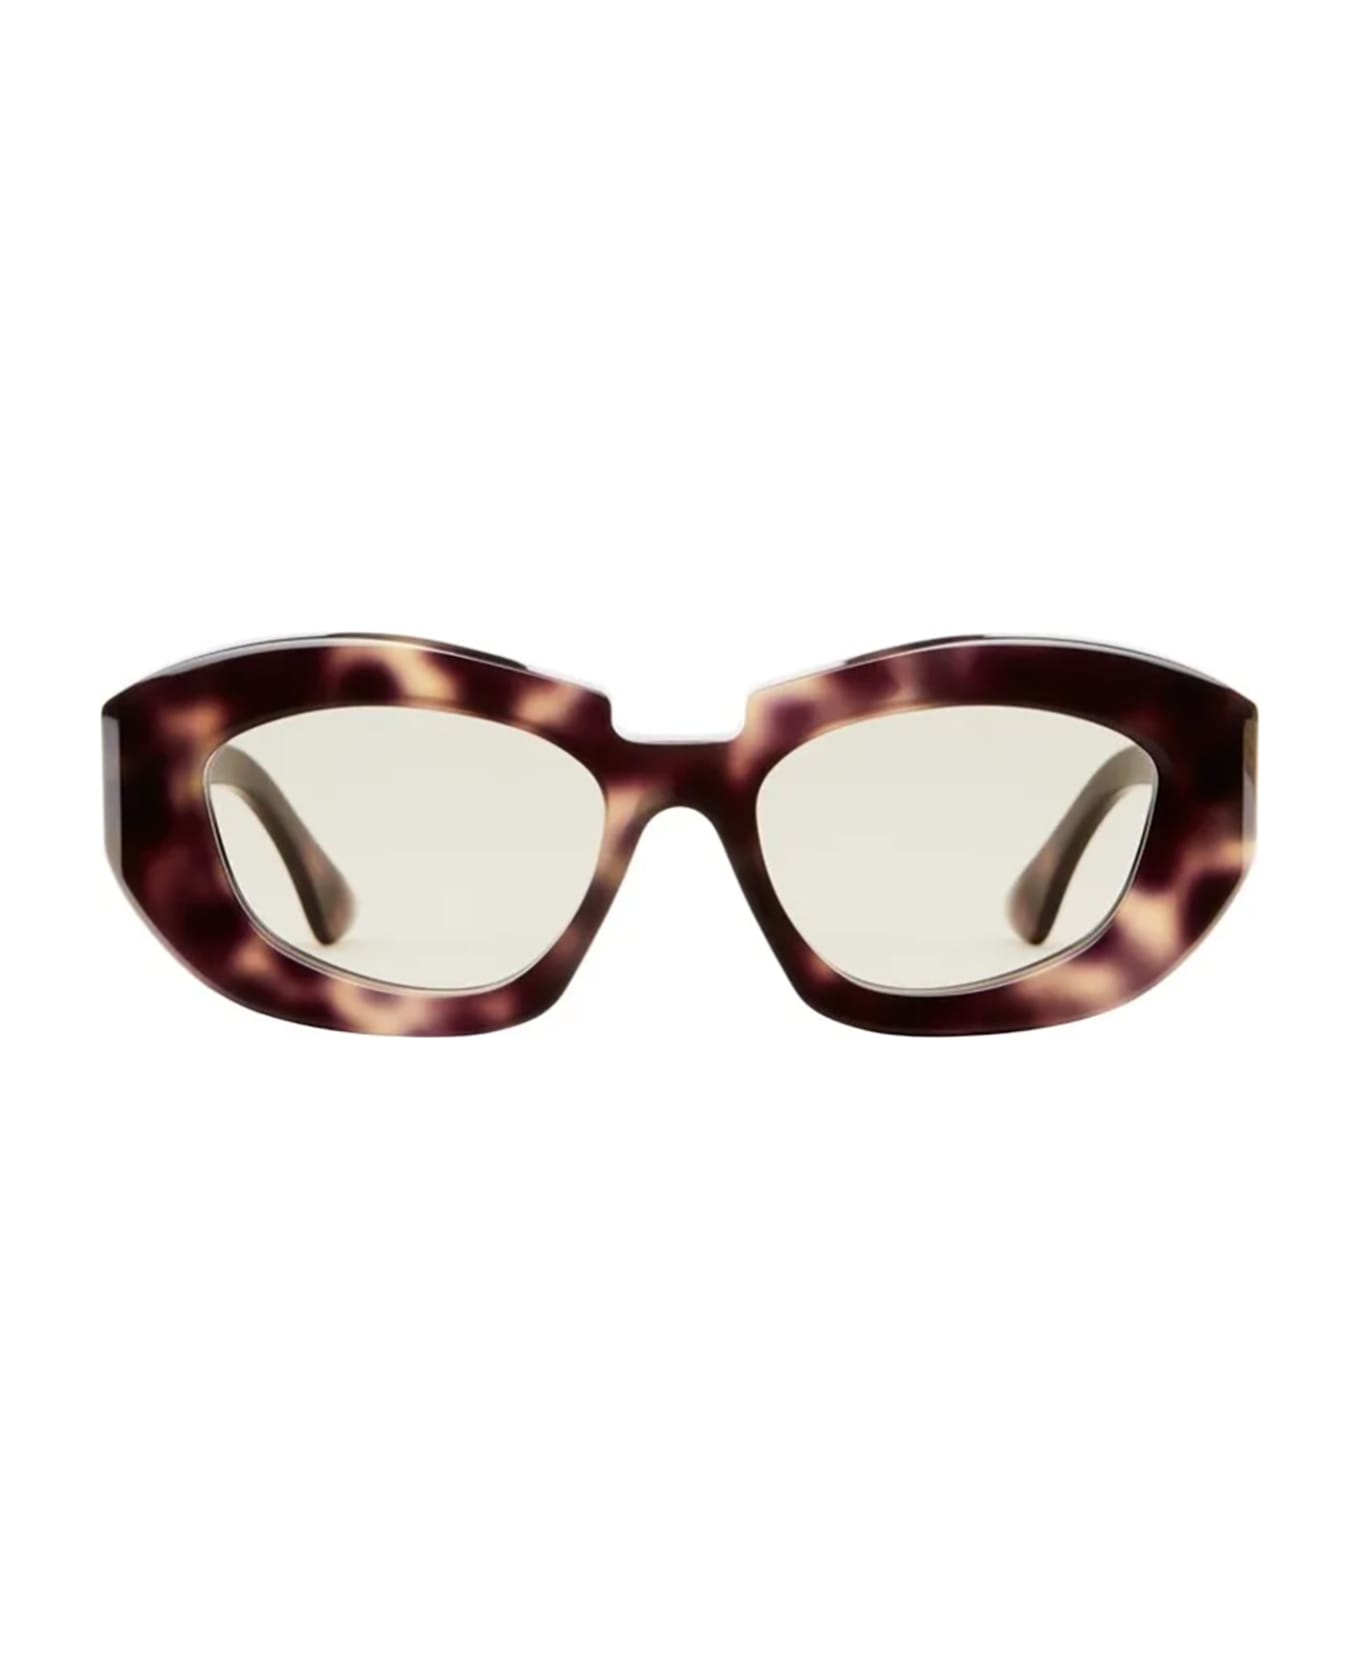 Kuboraum X23 Sunglasses - Pkt Brown サングラス